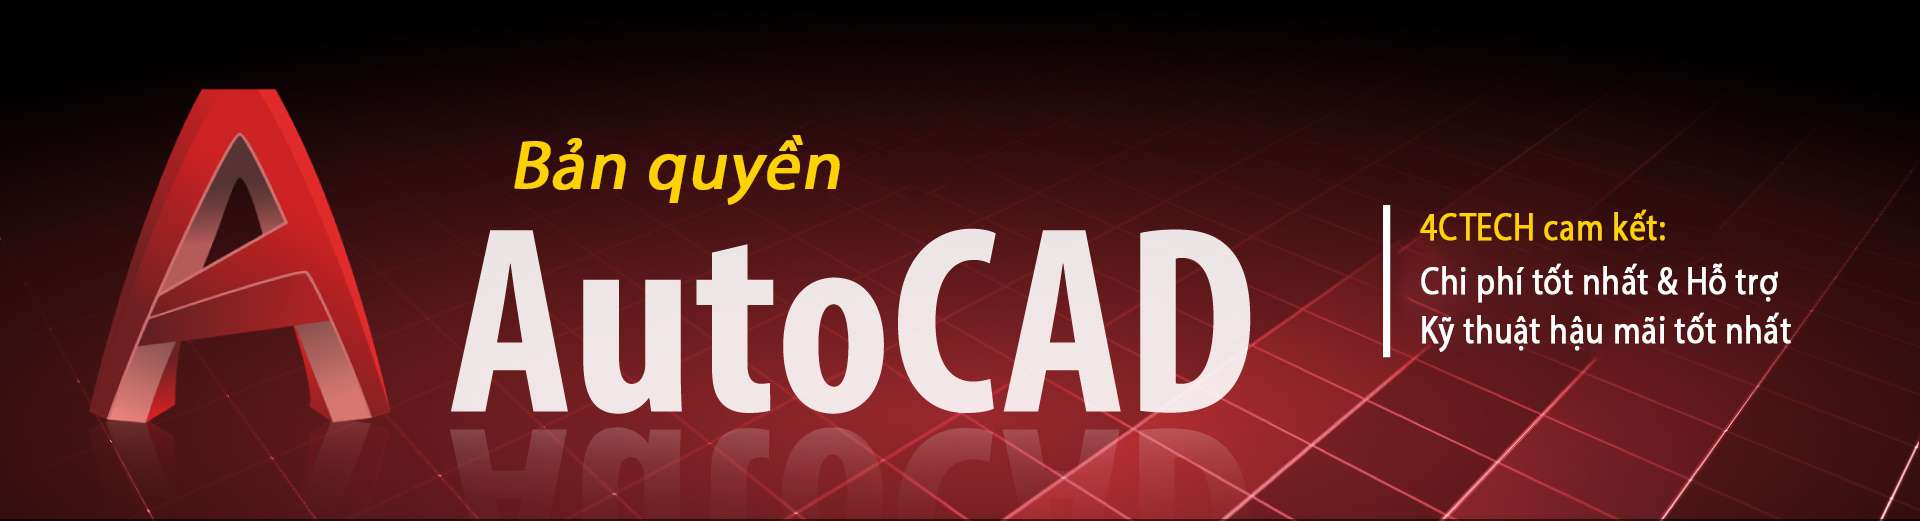 Phan mem Autocad ban quyen banner new